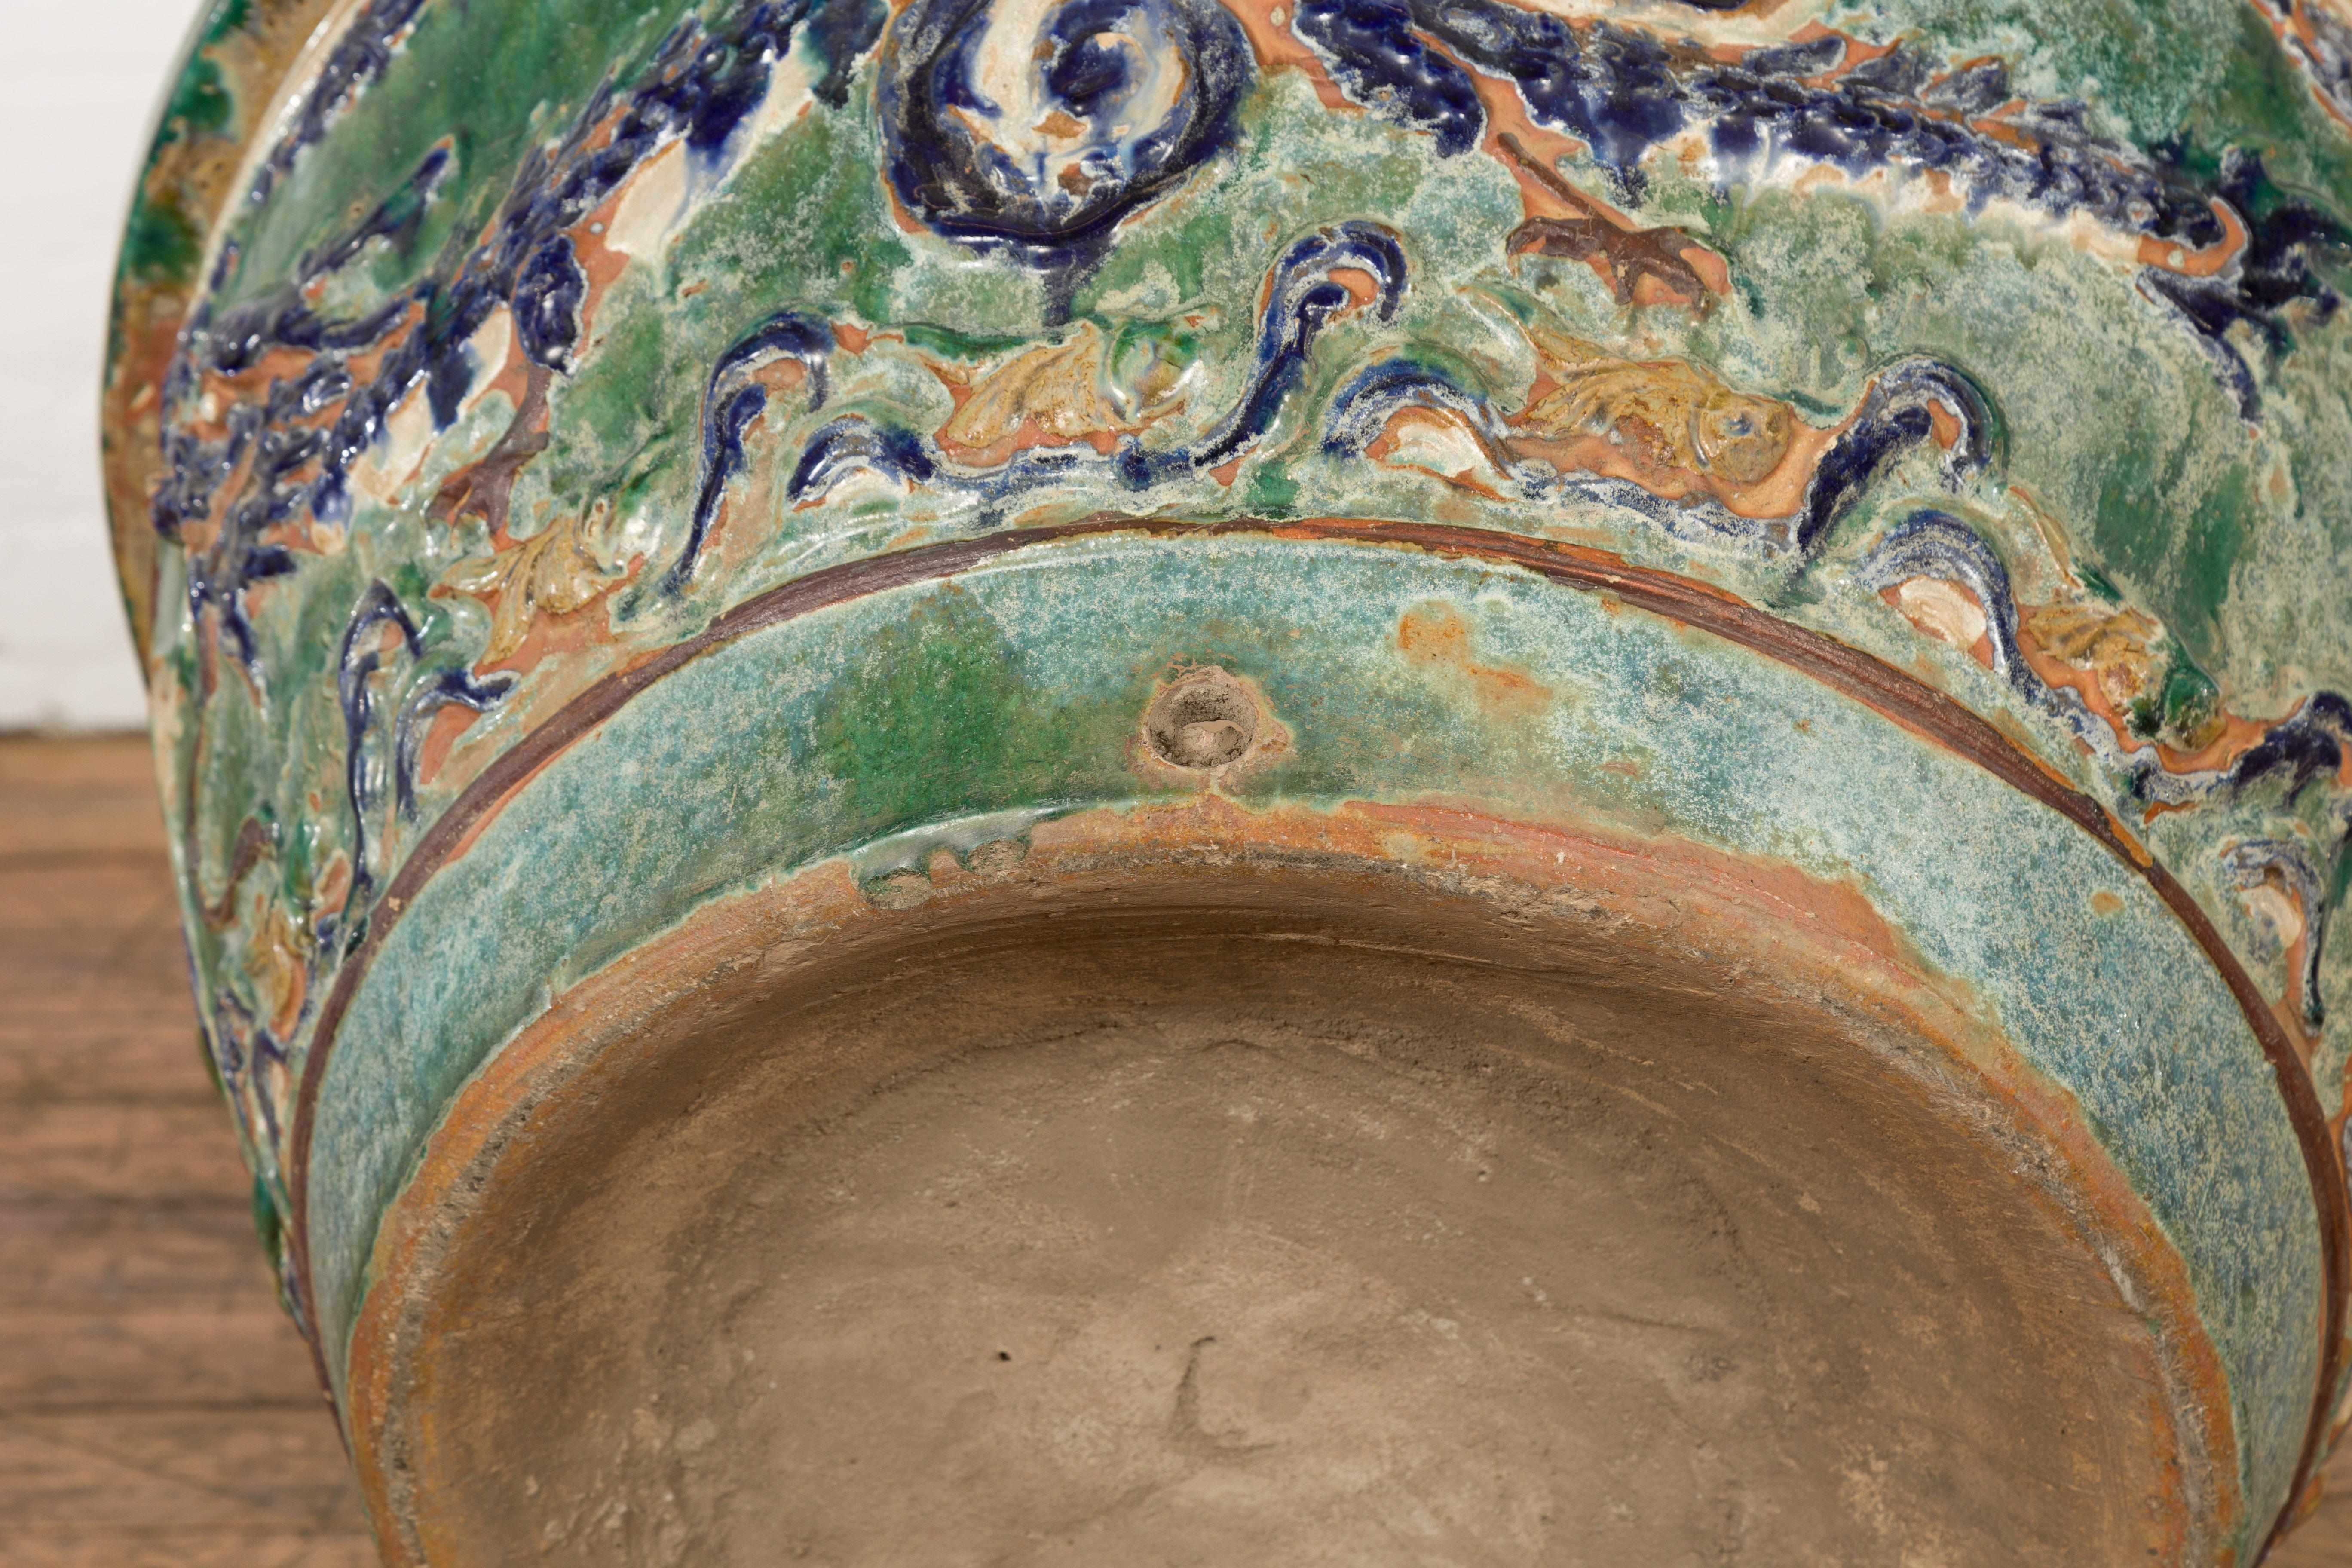 Large Green Antique Ceramic Planter with Blue Dragon Design 10